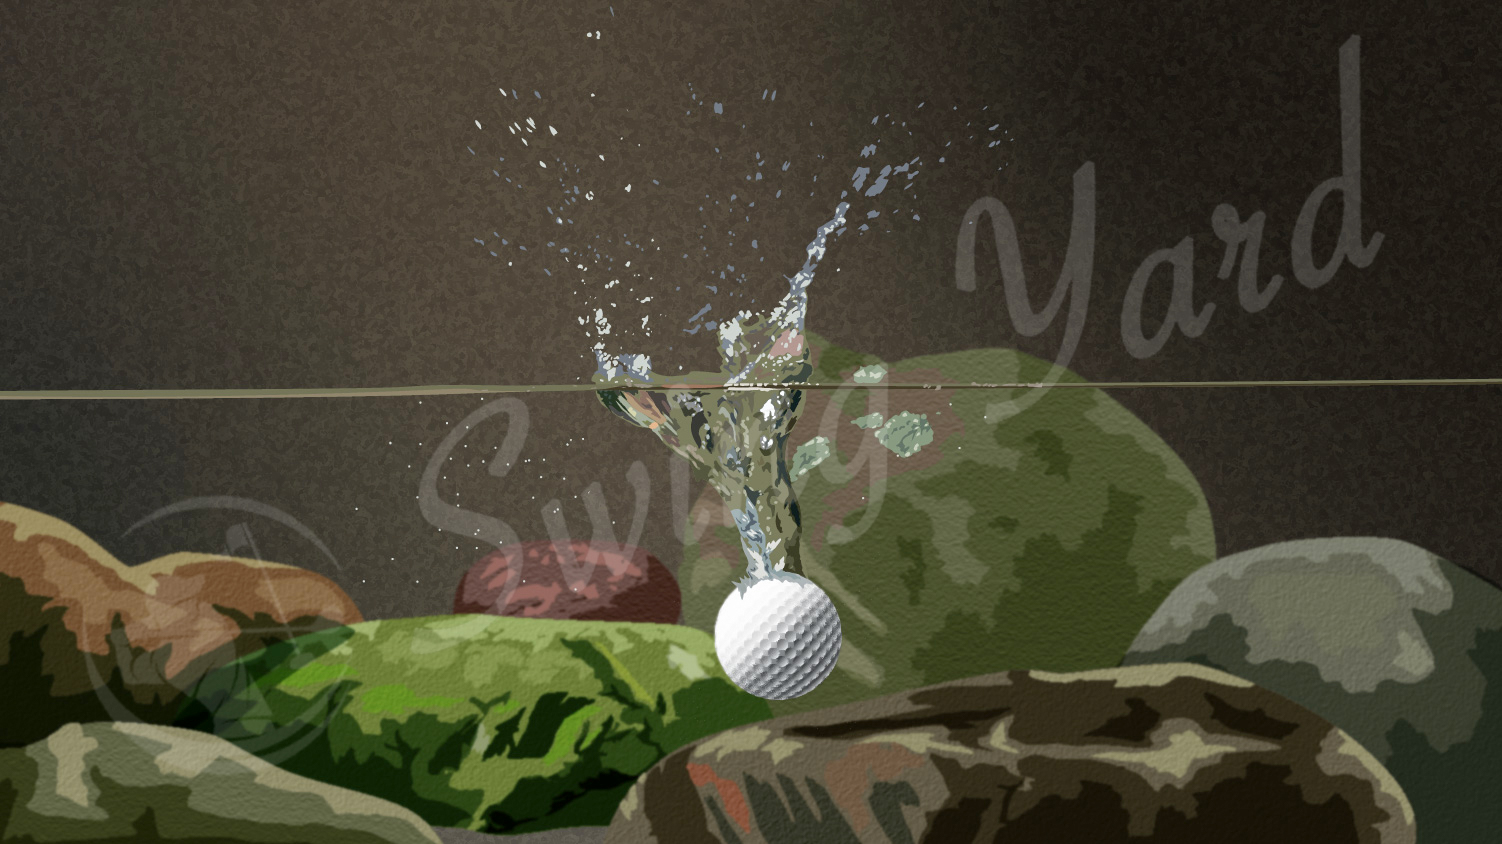 Underwater view of a golf ball splashing